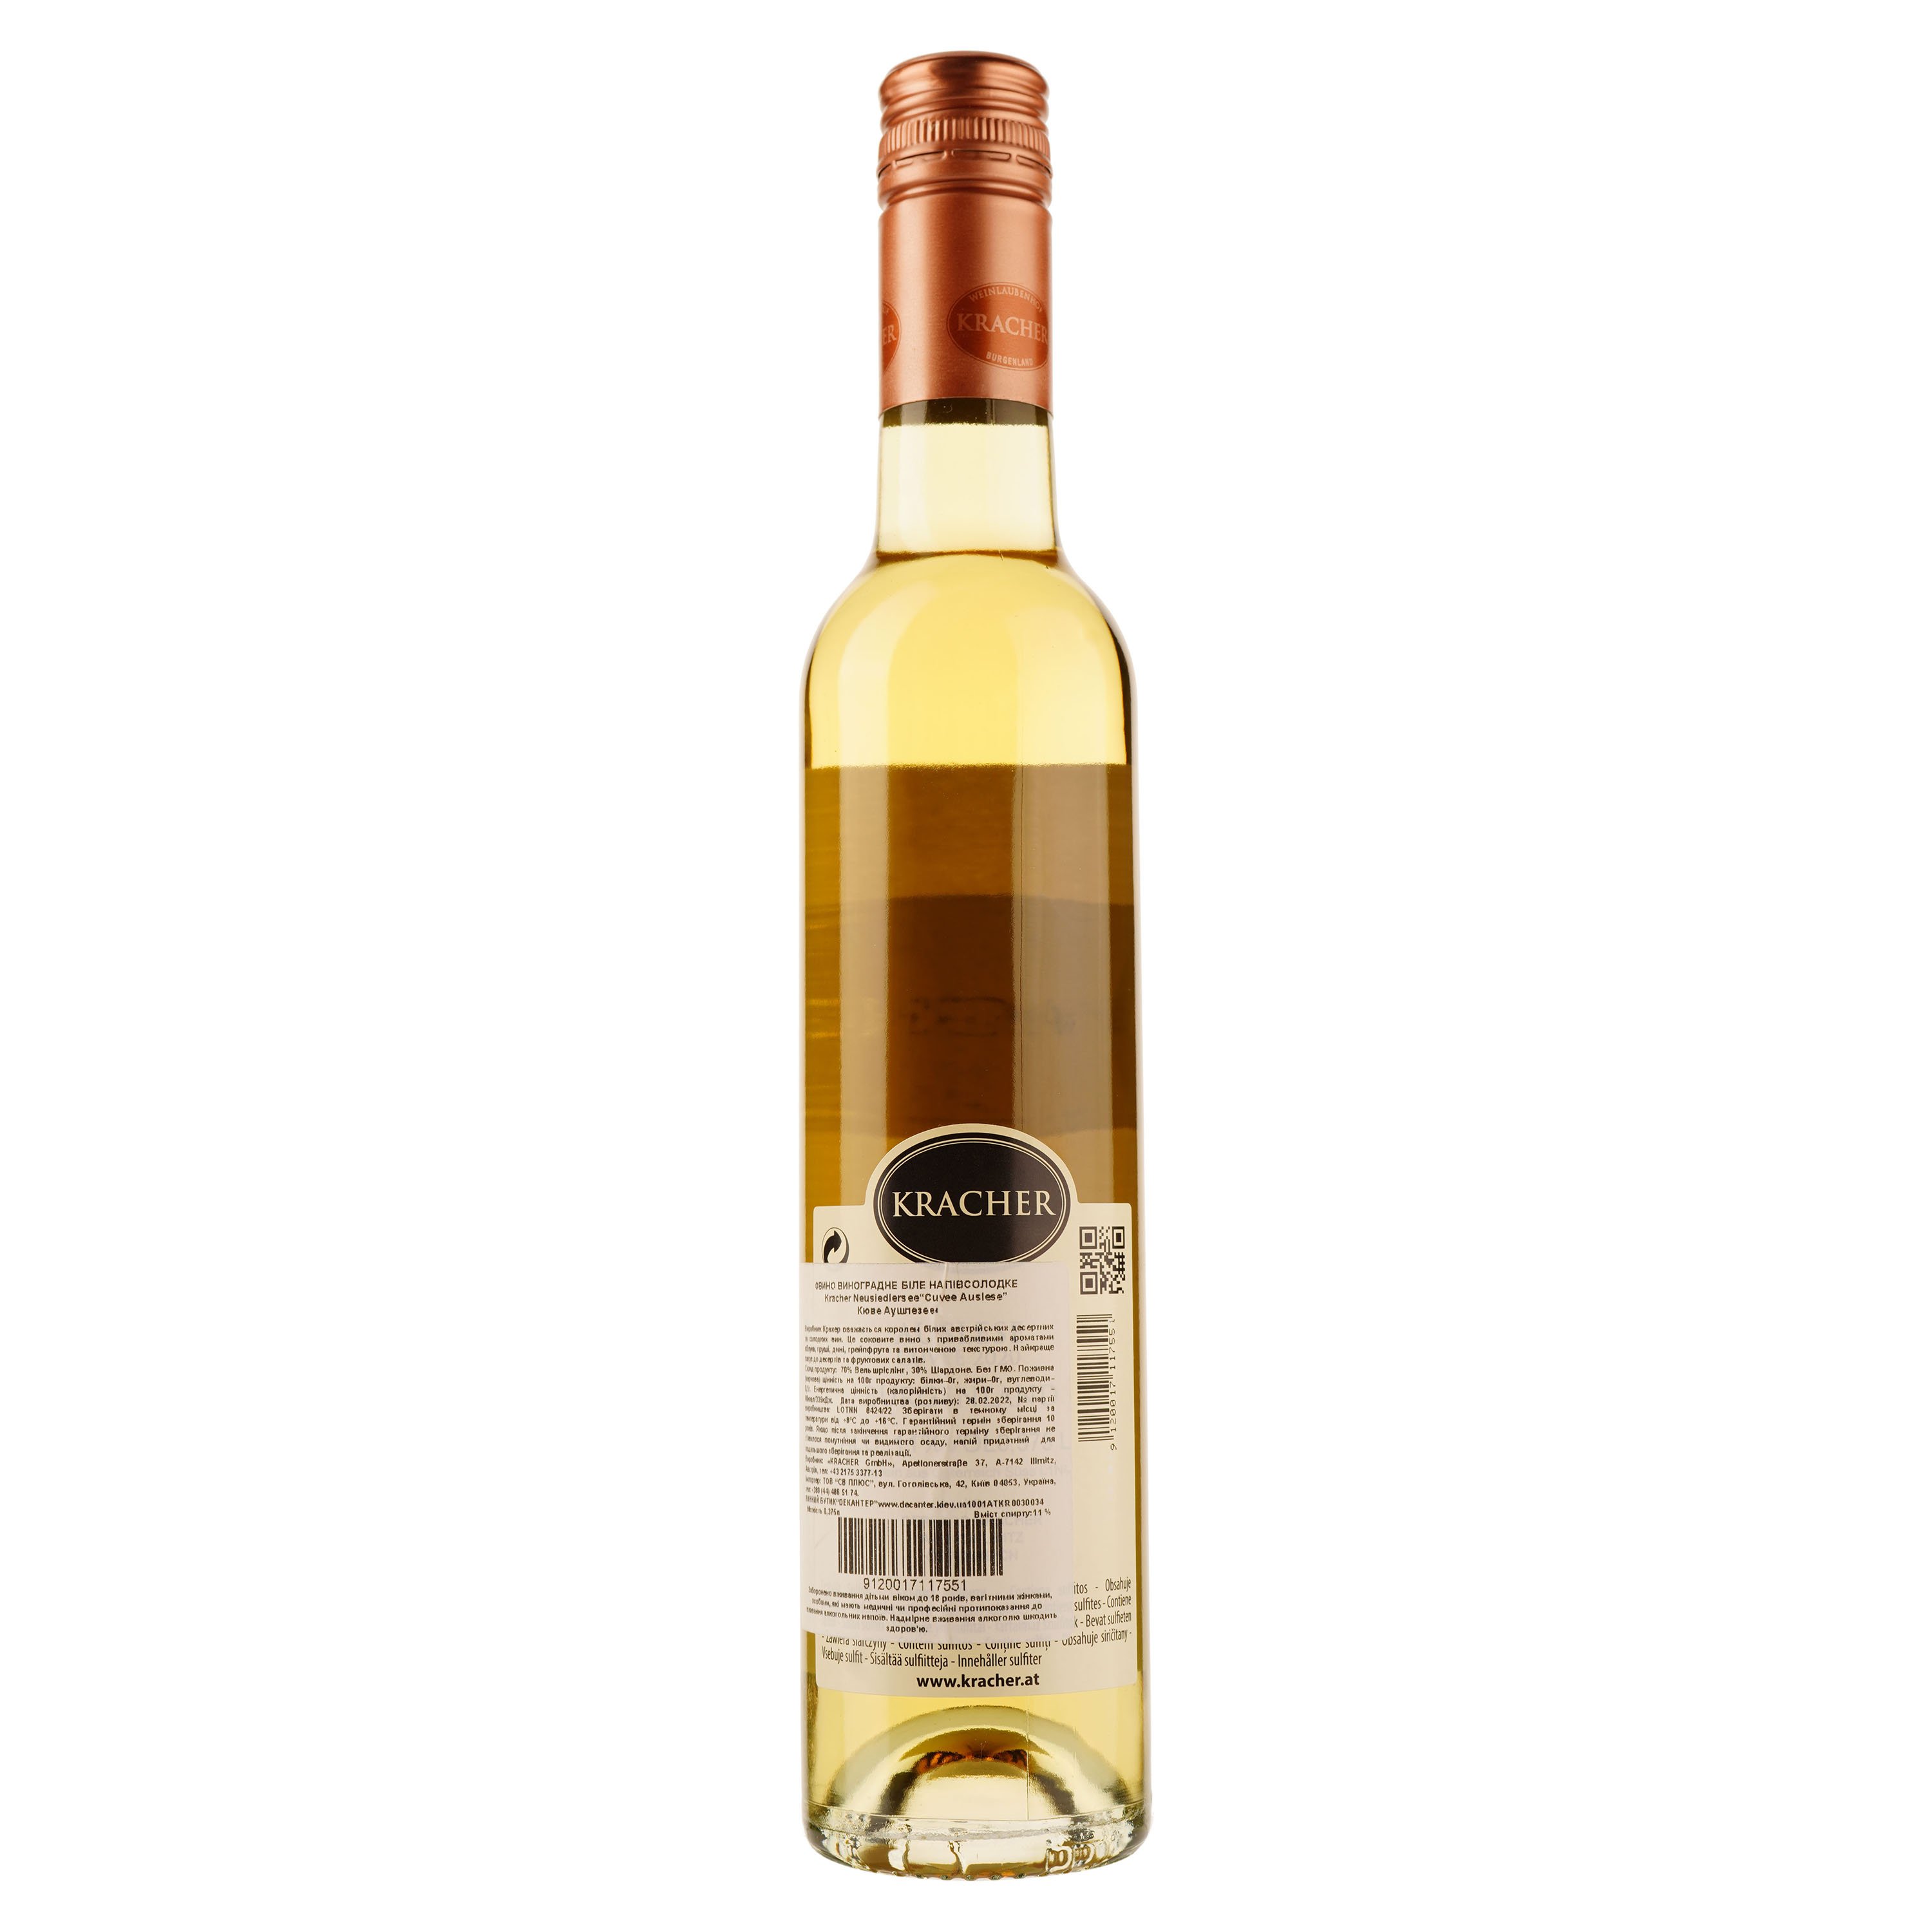 Вино Kracher Neusiedlersee Cuvee Auslese Sweet Wine 2020, белое, сладкое, 0,375 л - фото 2